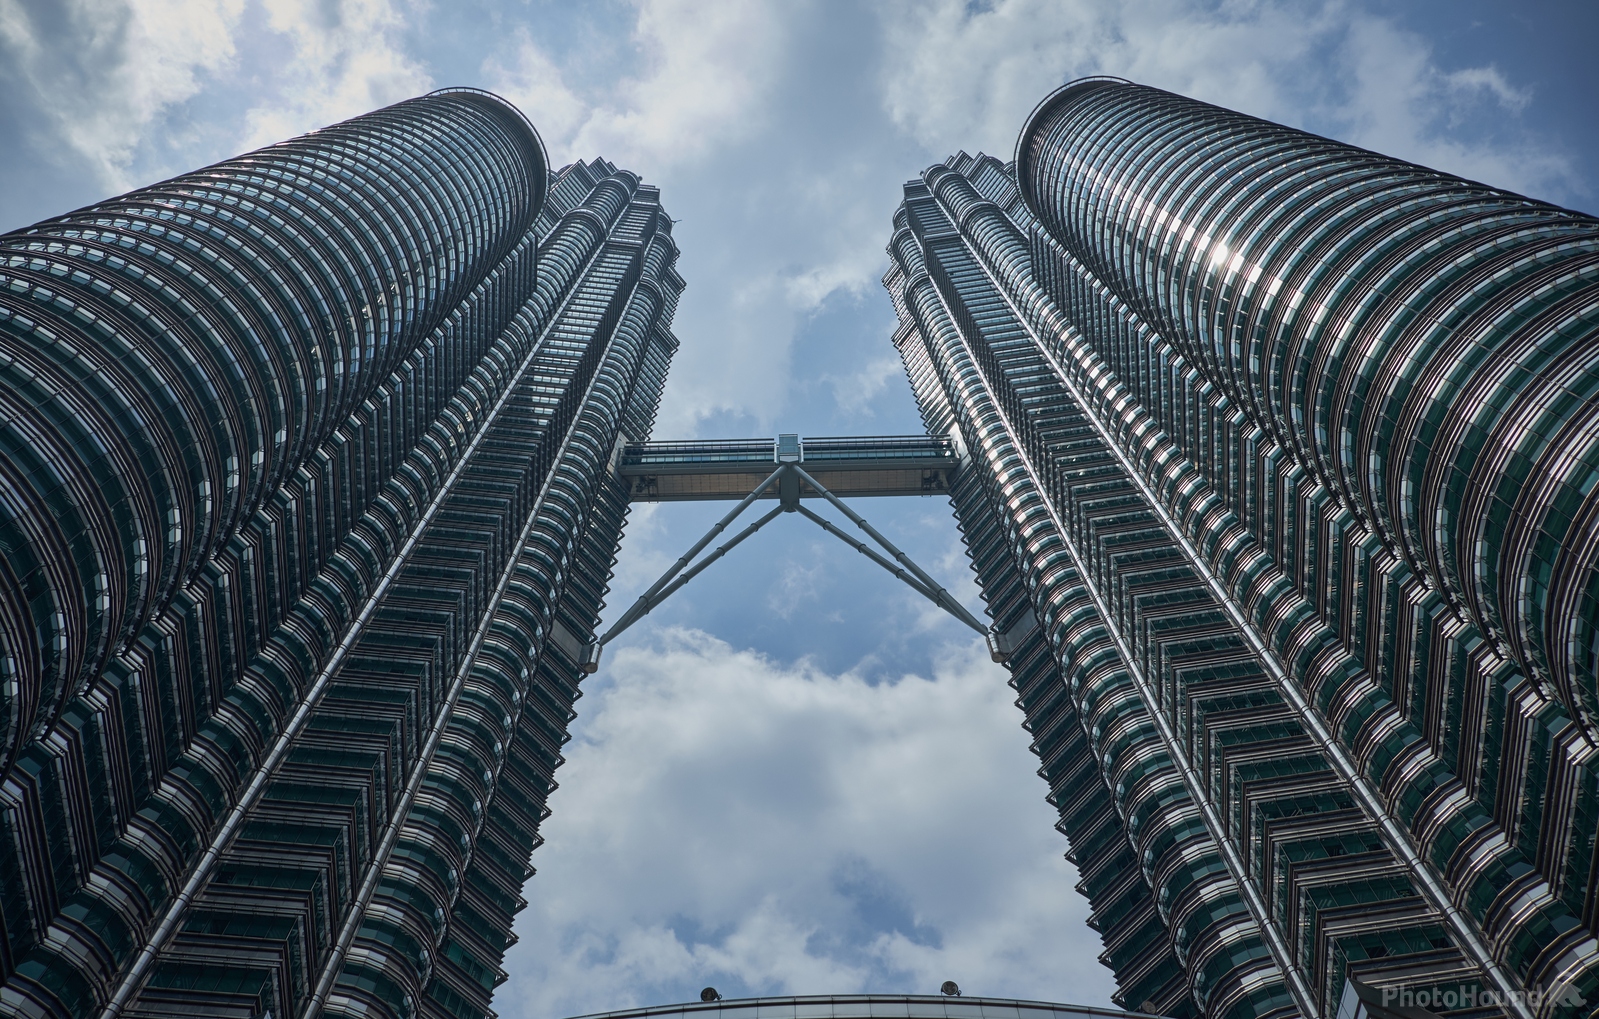 Image of Petronas Towers by Nick Hood